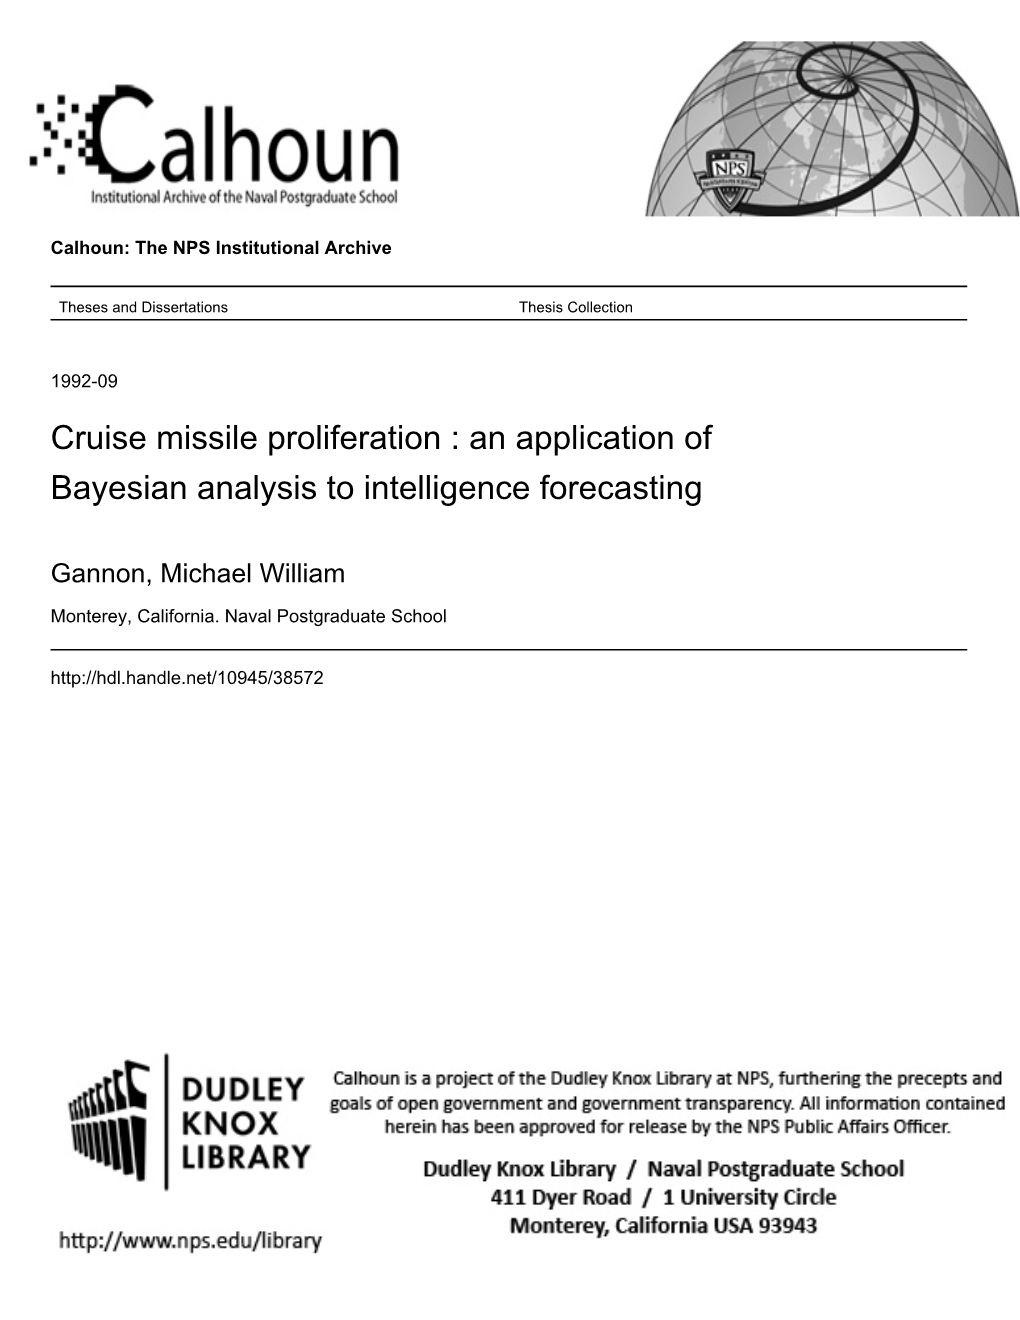 Cruise Missile Proliferation : an Application of Bayesian Analysis to Intelligence Forecasting